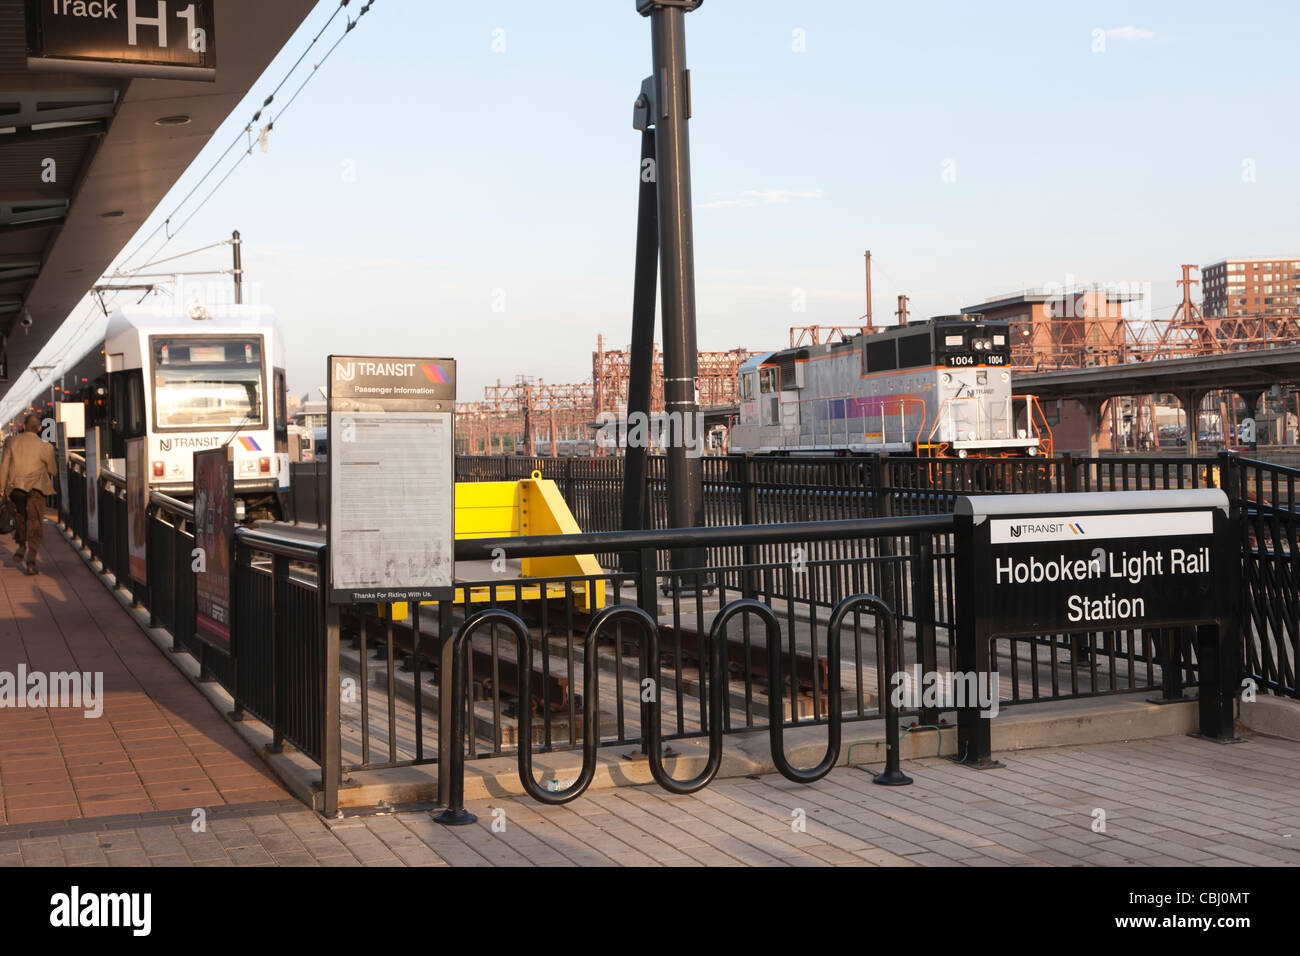 The New Jersey Transit Hoboken Light Rail Station located in Hoboken Terminal in Hoboken, New Jersey. Stock Photo